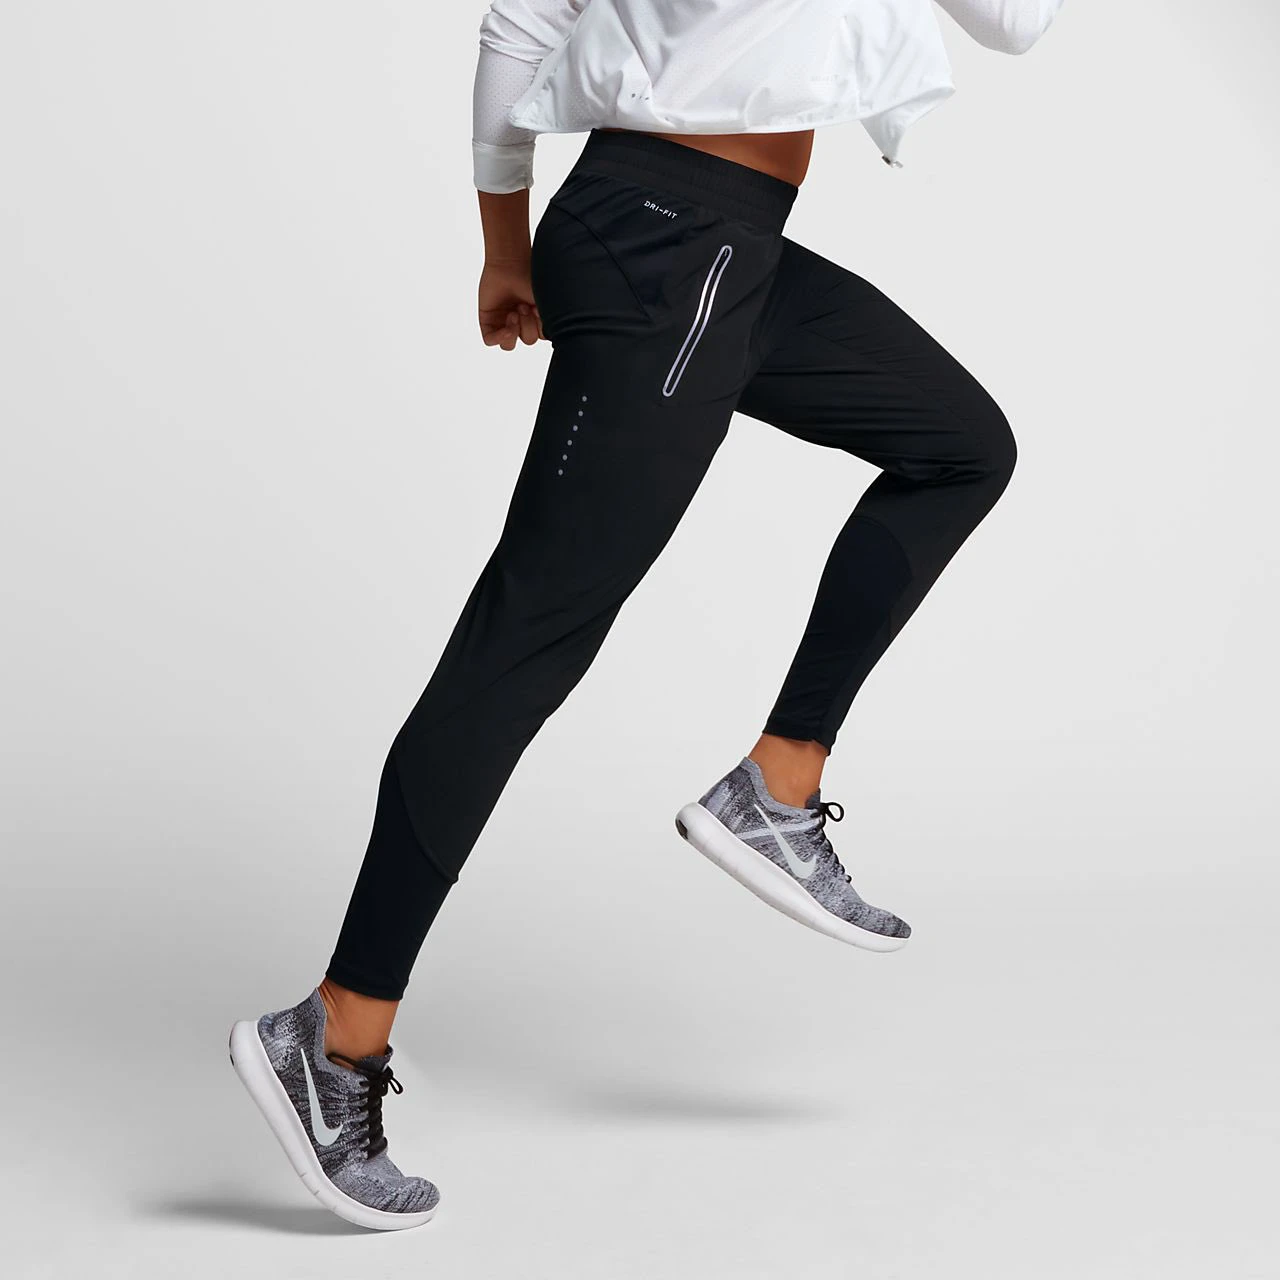 Kate Middleton's Tracksuit Bottoms - Nike Swift 27 Running Pants